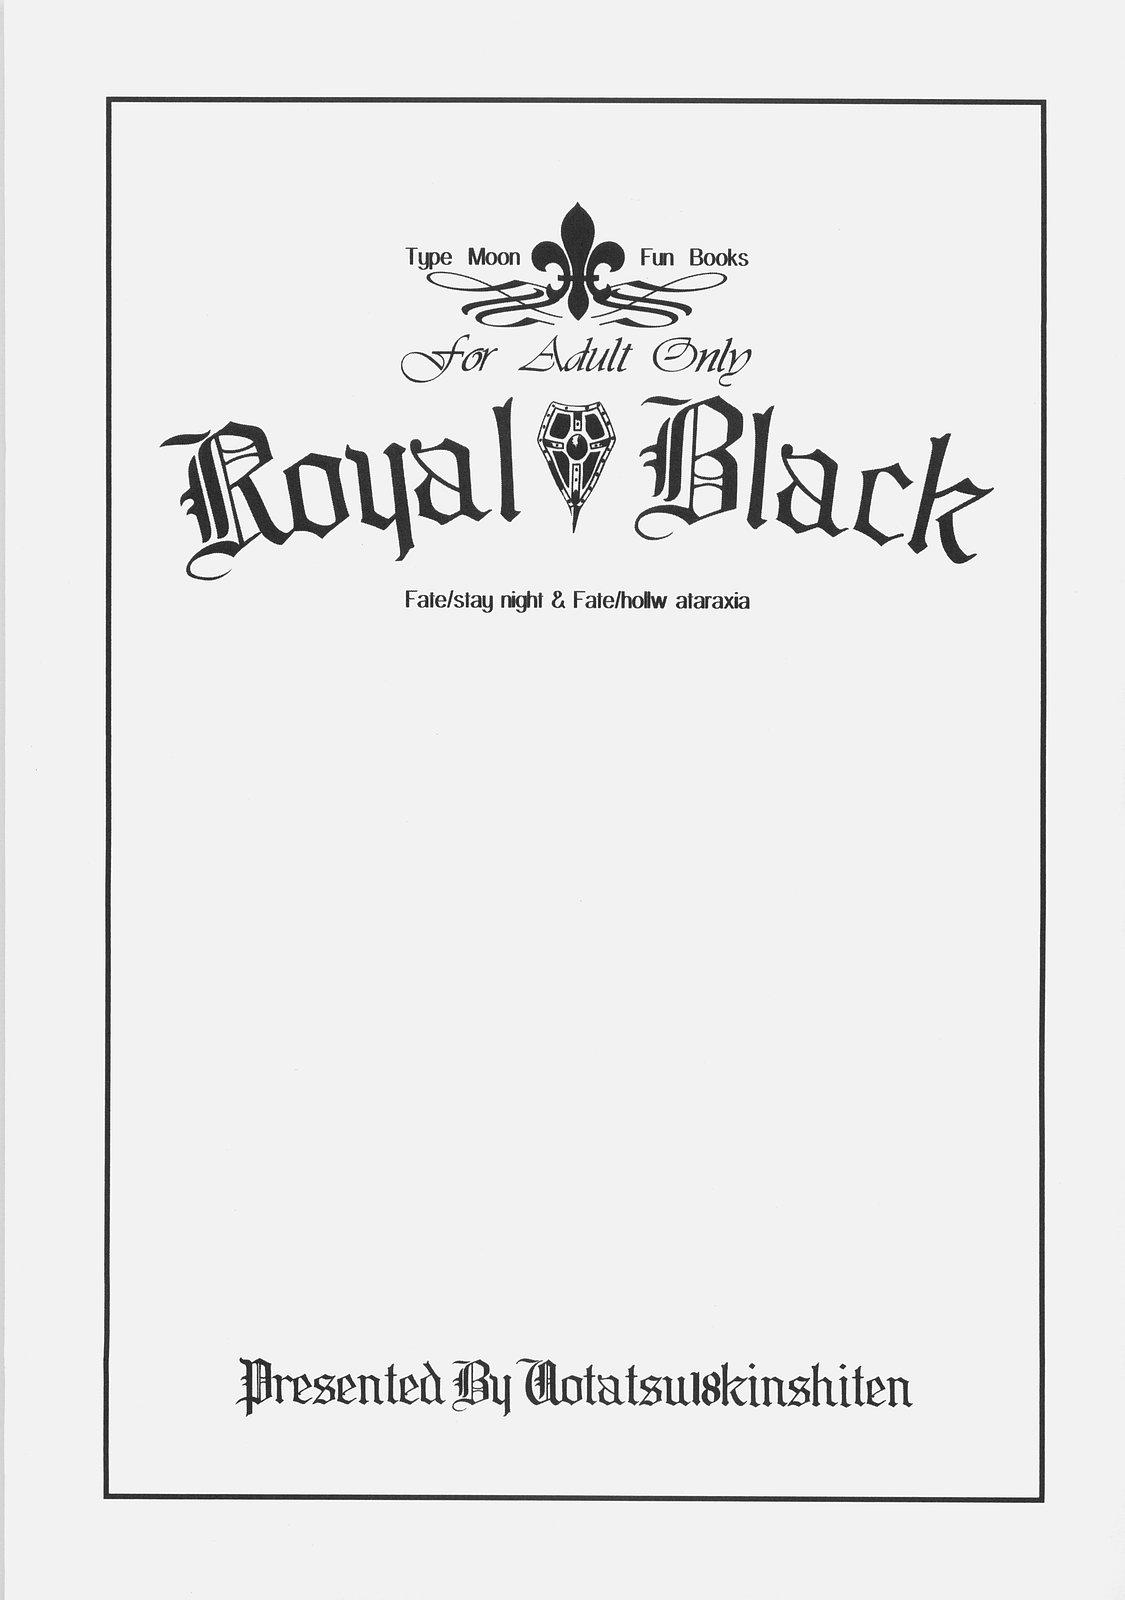 Royal Black 1